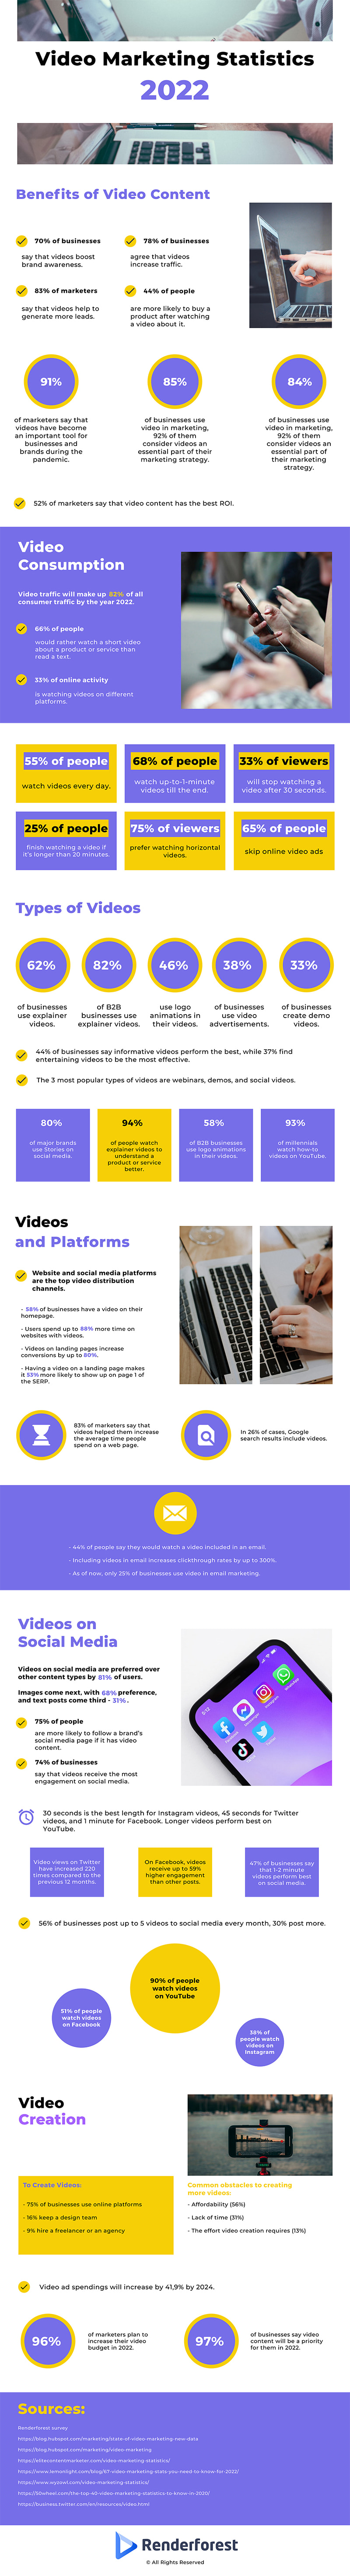 Video Marketing Statistics Infographic